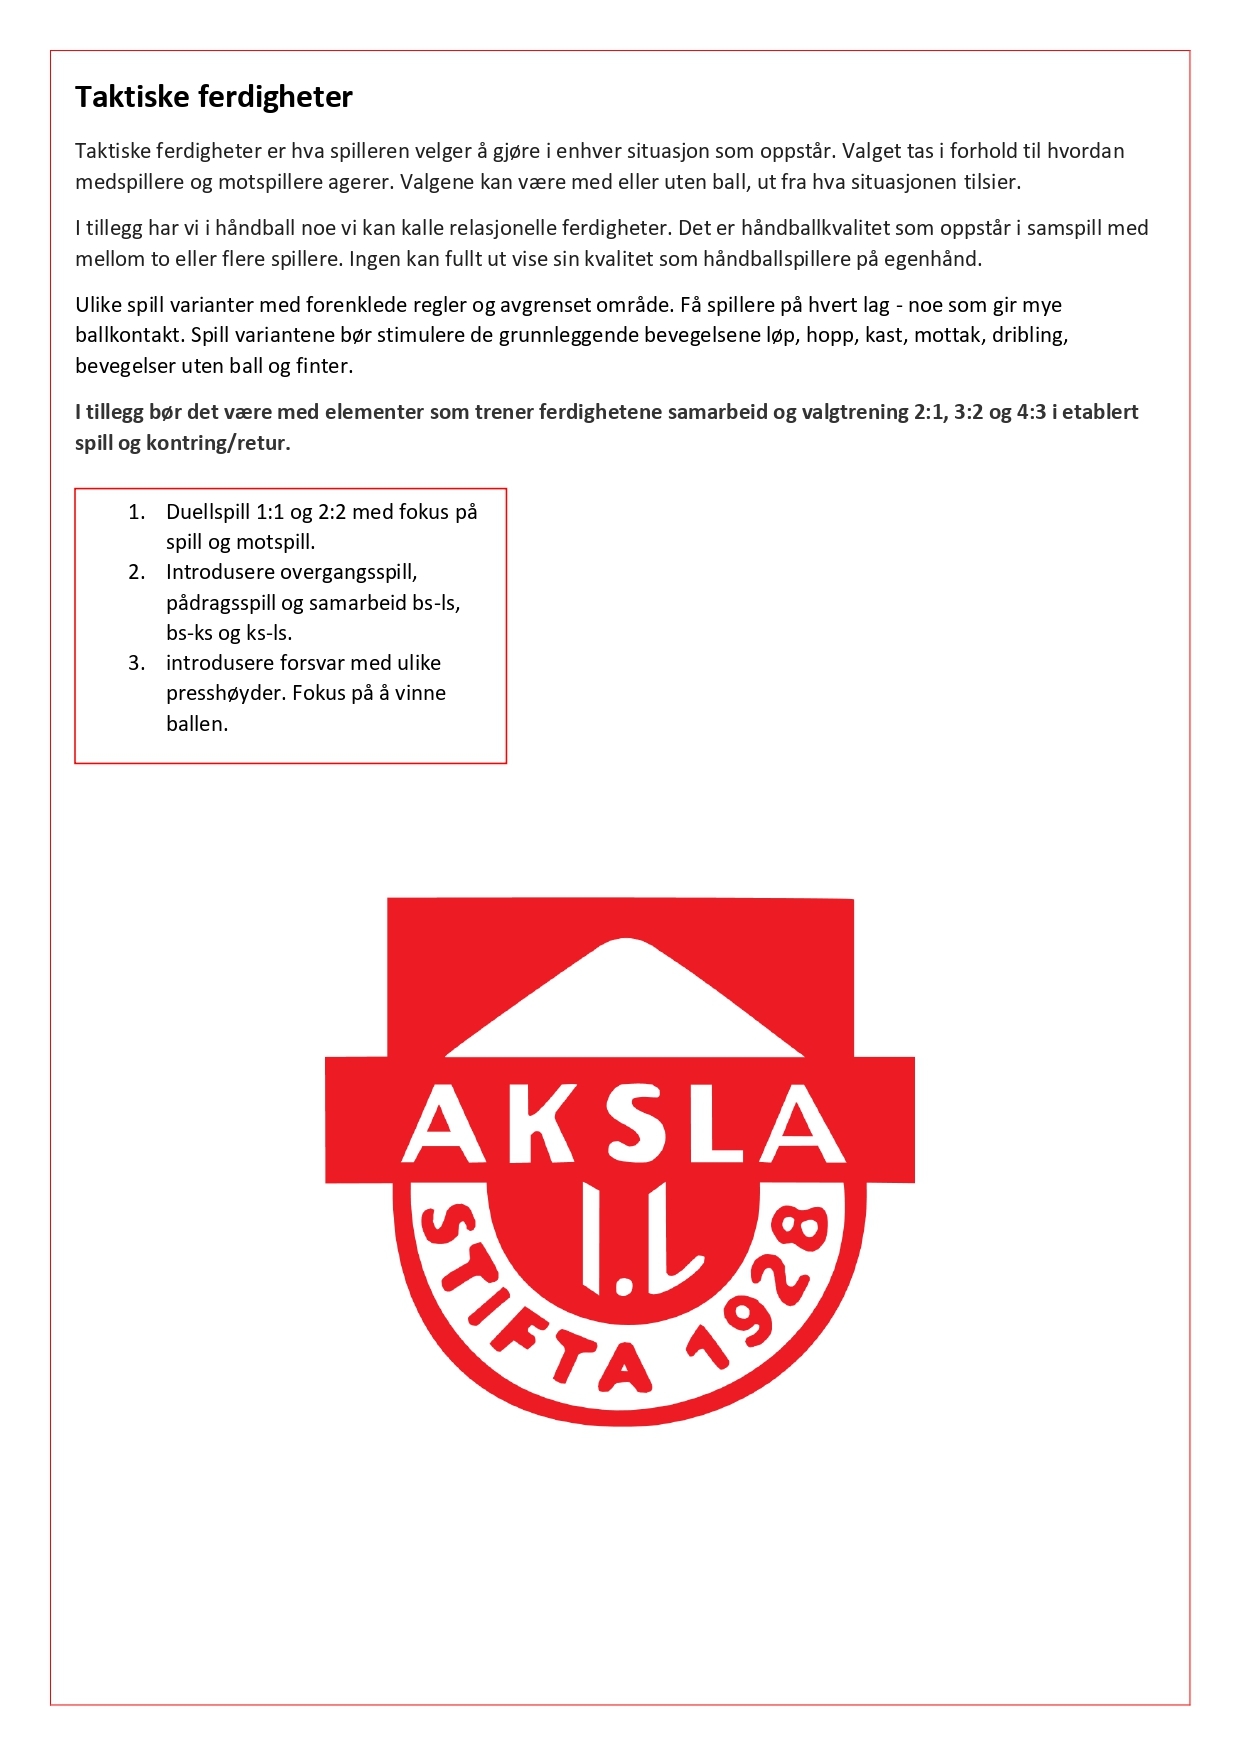 Utviklingsstrapp Aksla håndball _1_-5-9_page-0003.jpg